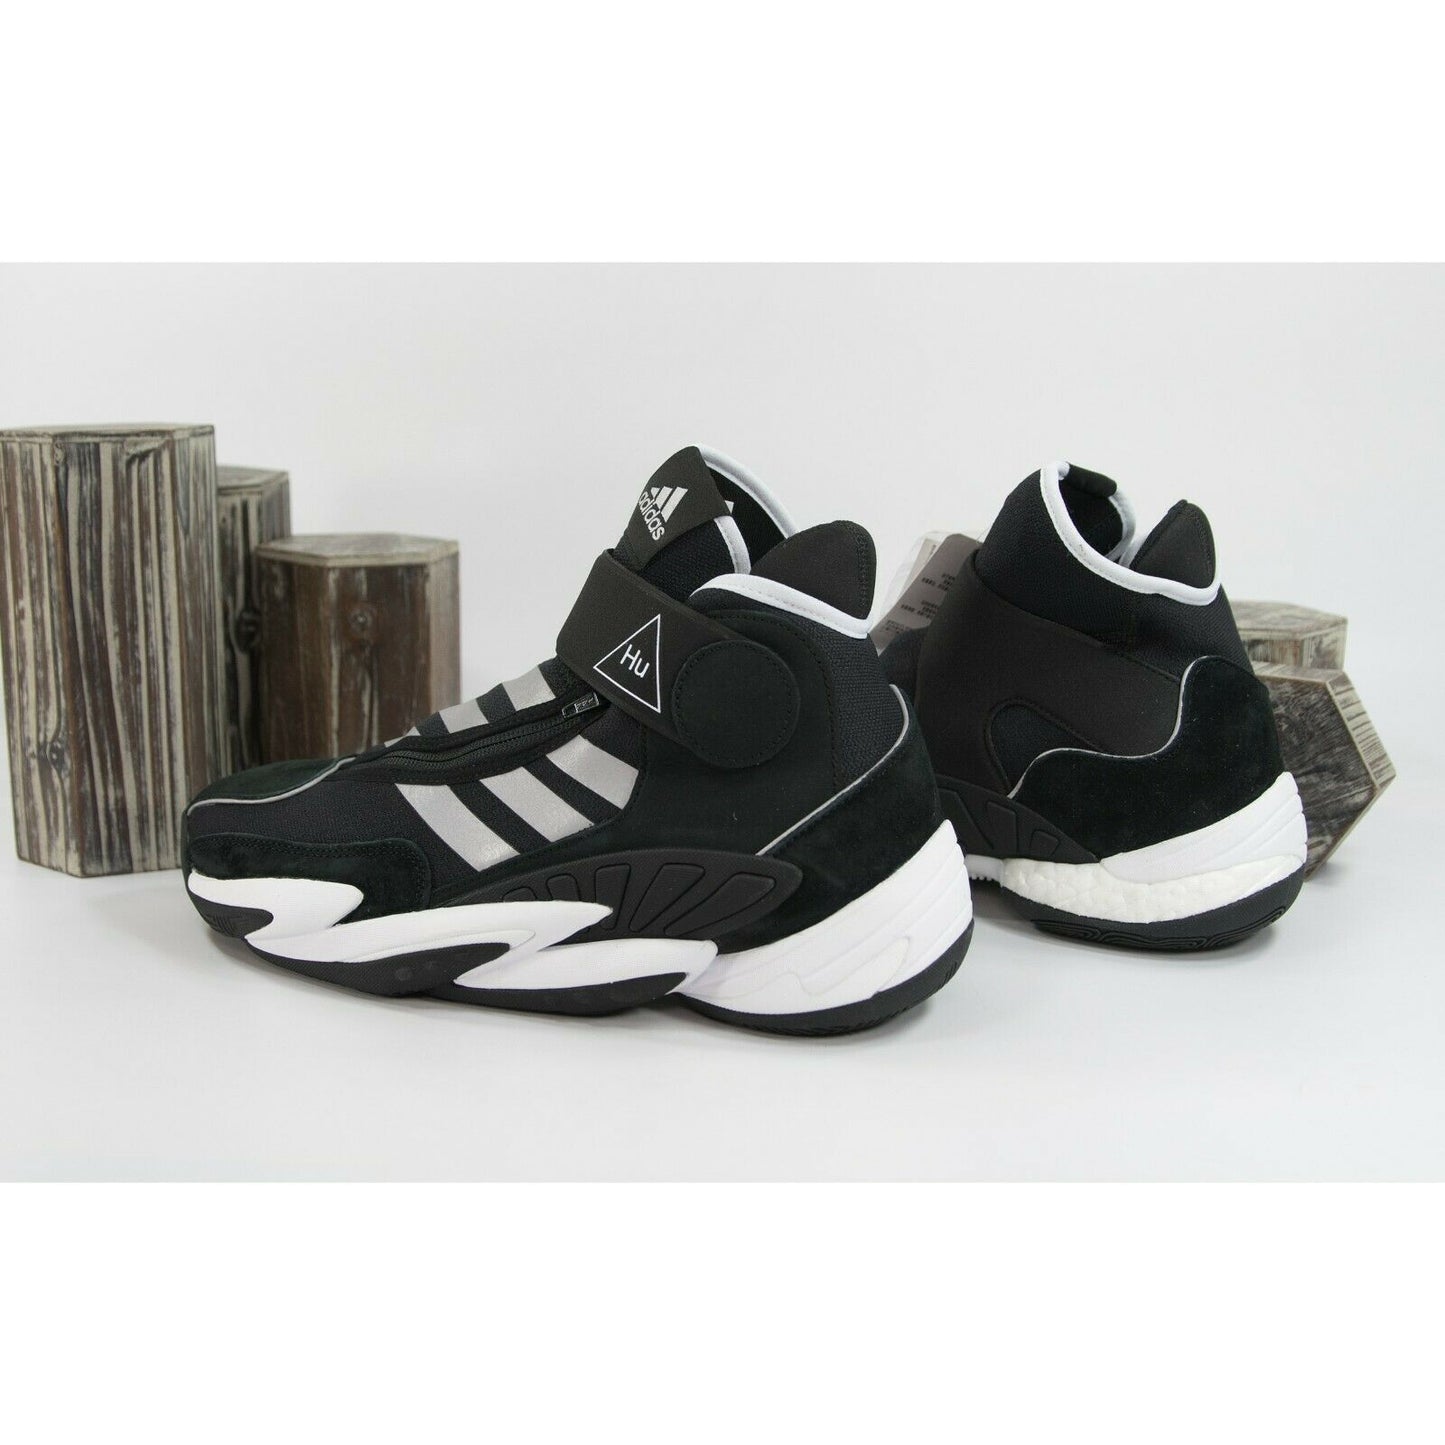 Adidas X Pharrell Williams Black Crazy BYW HU Basketball Shoes Mens 11 NIB